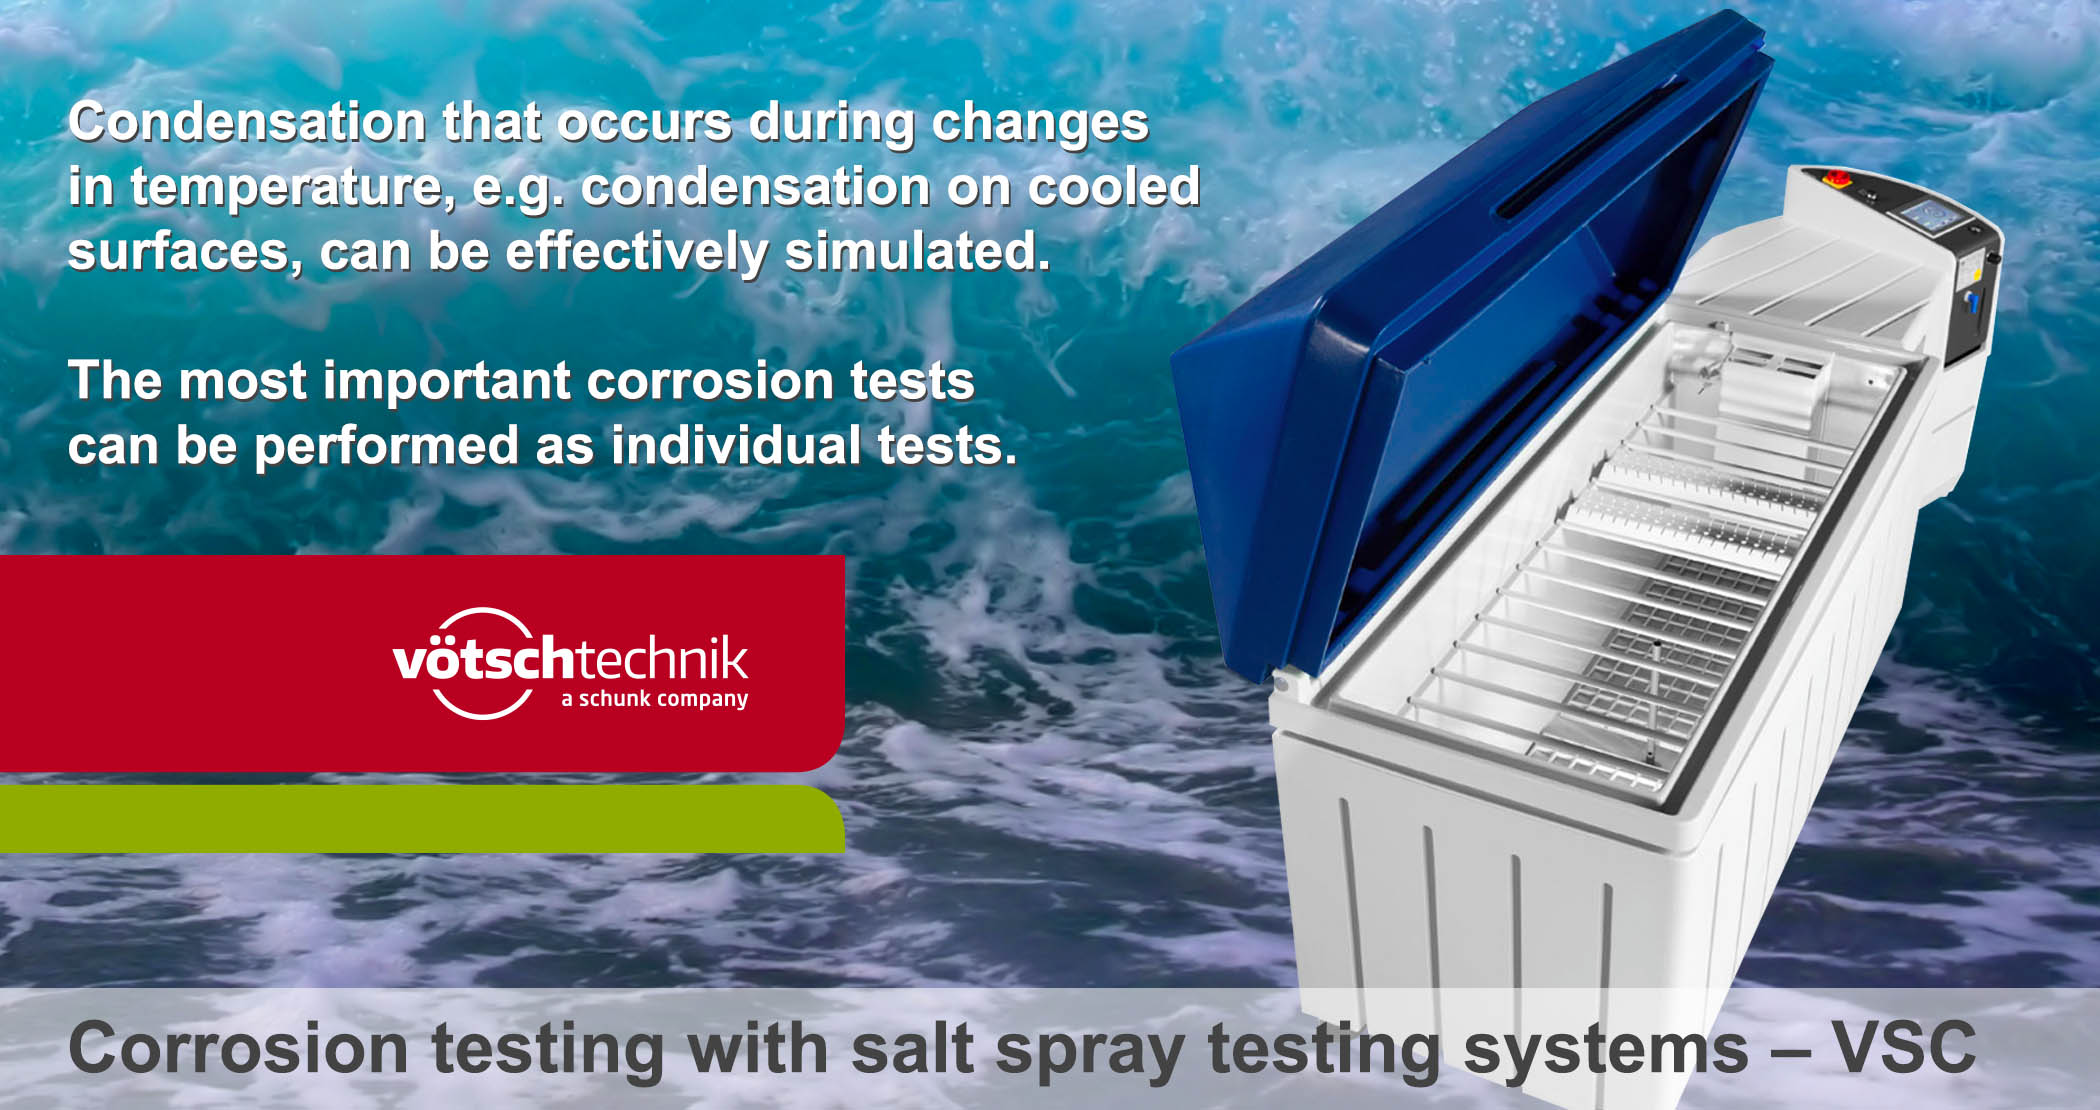 VSC salt spray testing systems, Vötsch Technik